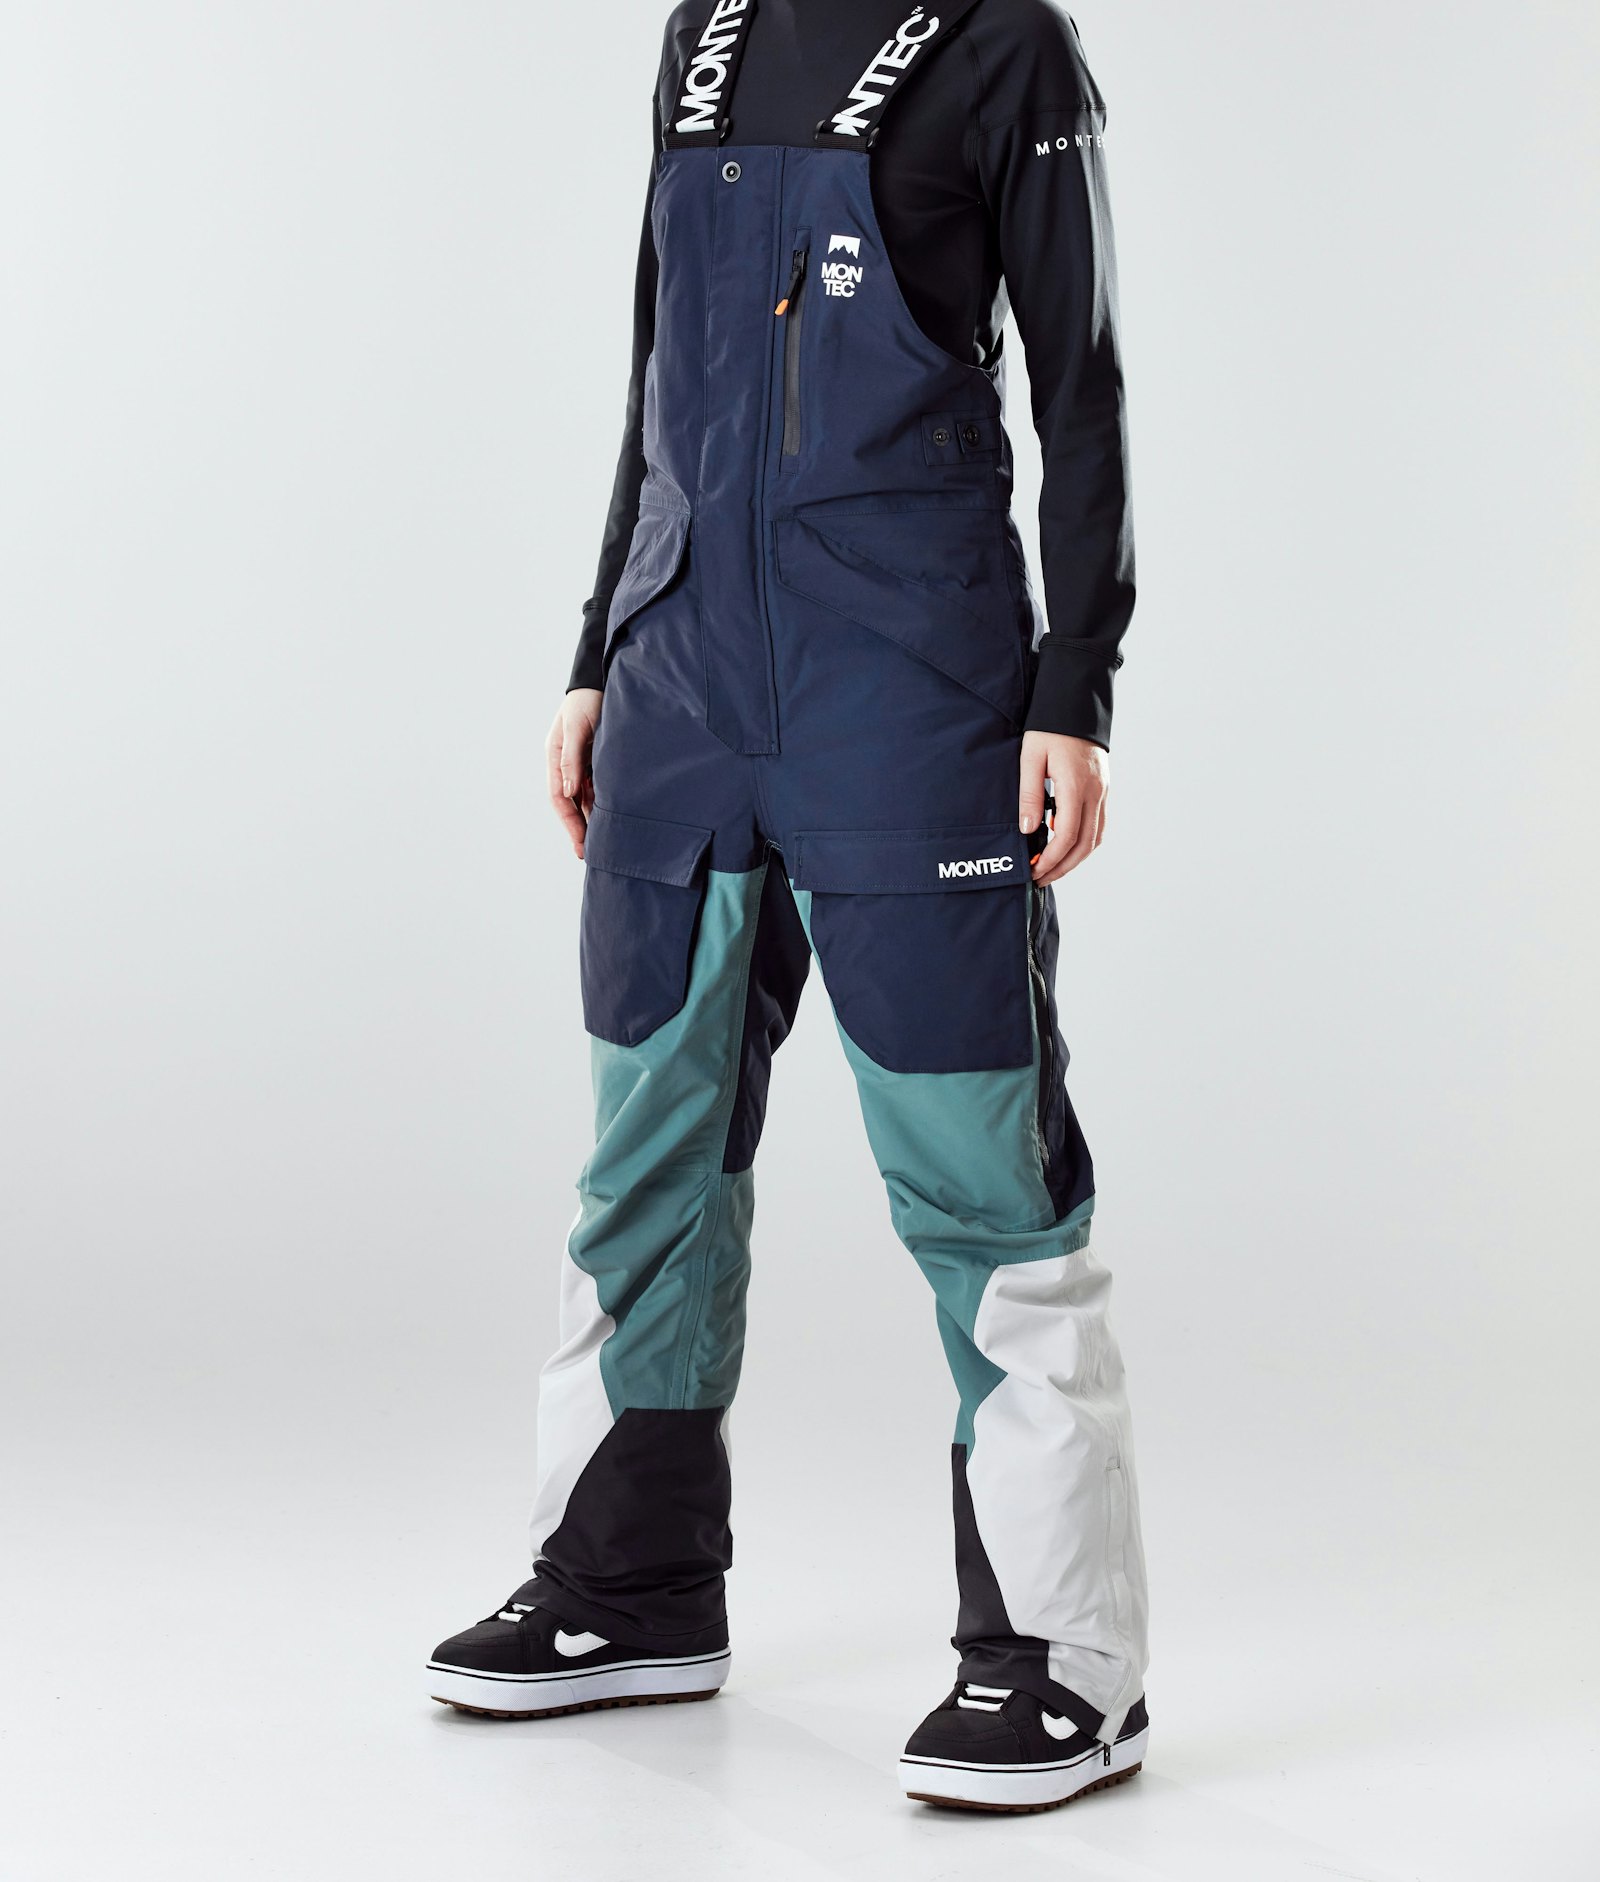 Montec Fawk W 2020 Snowboardhose Damen Marine/Atlantic/Light Grey